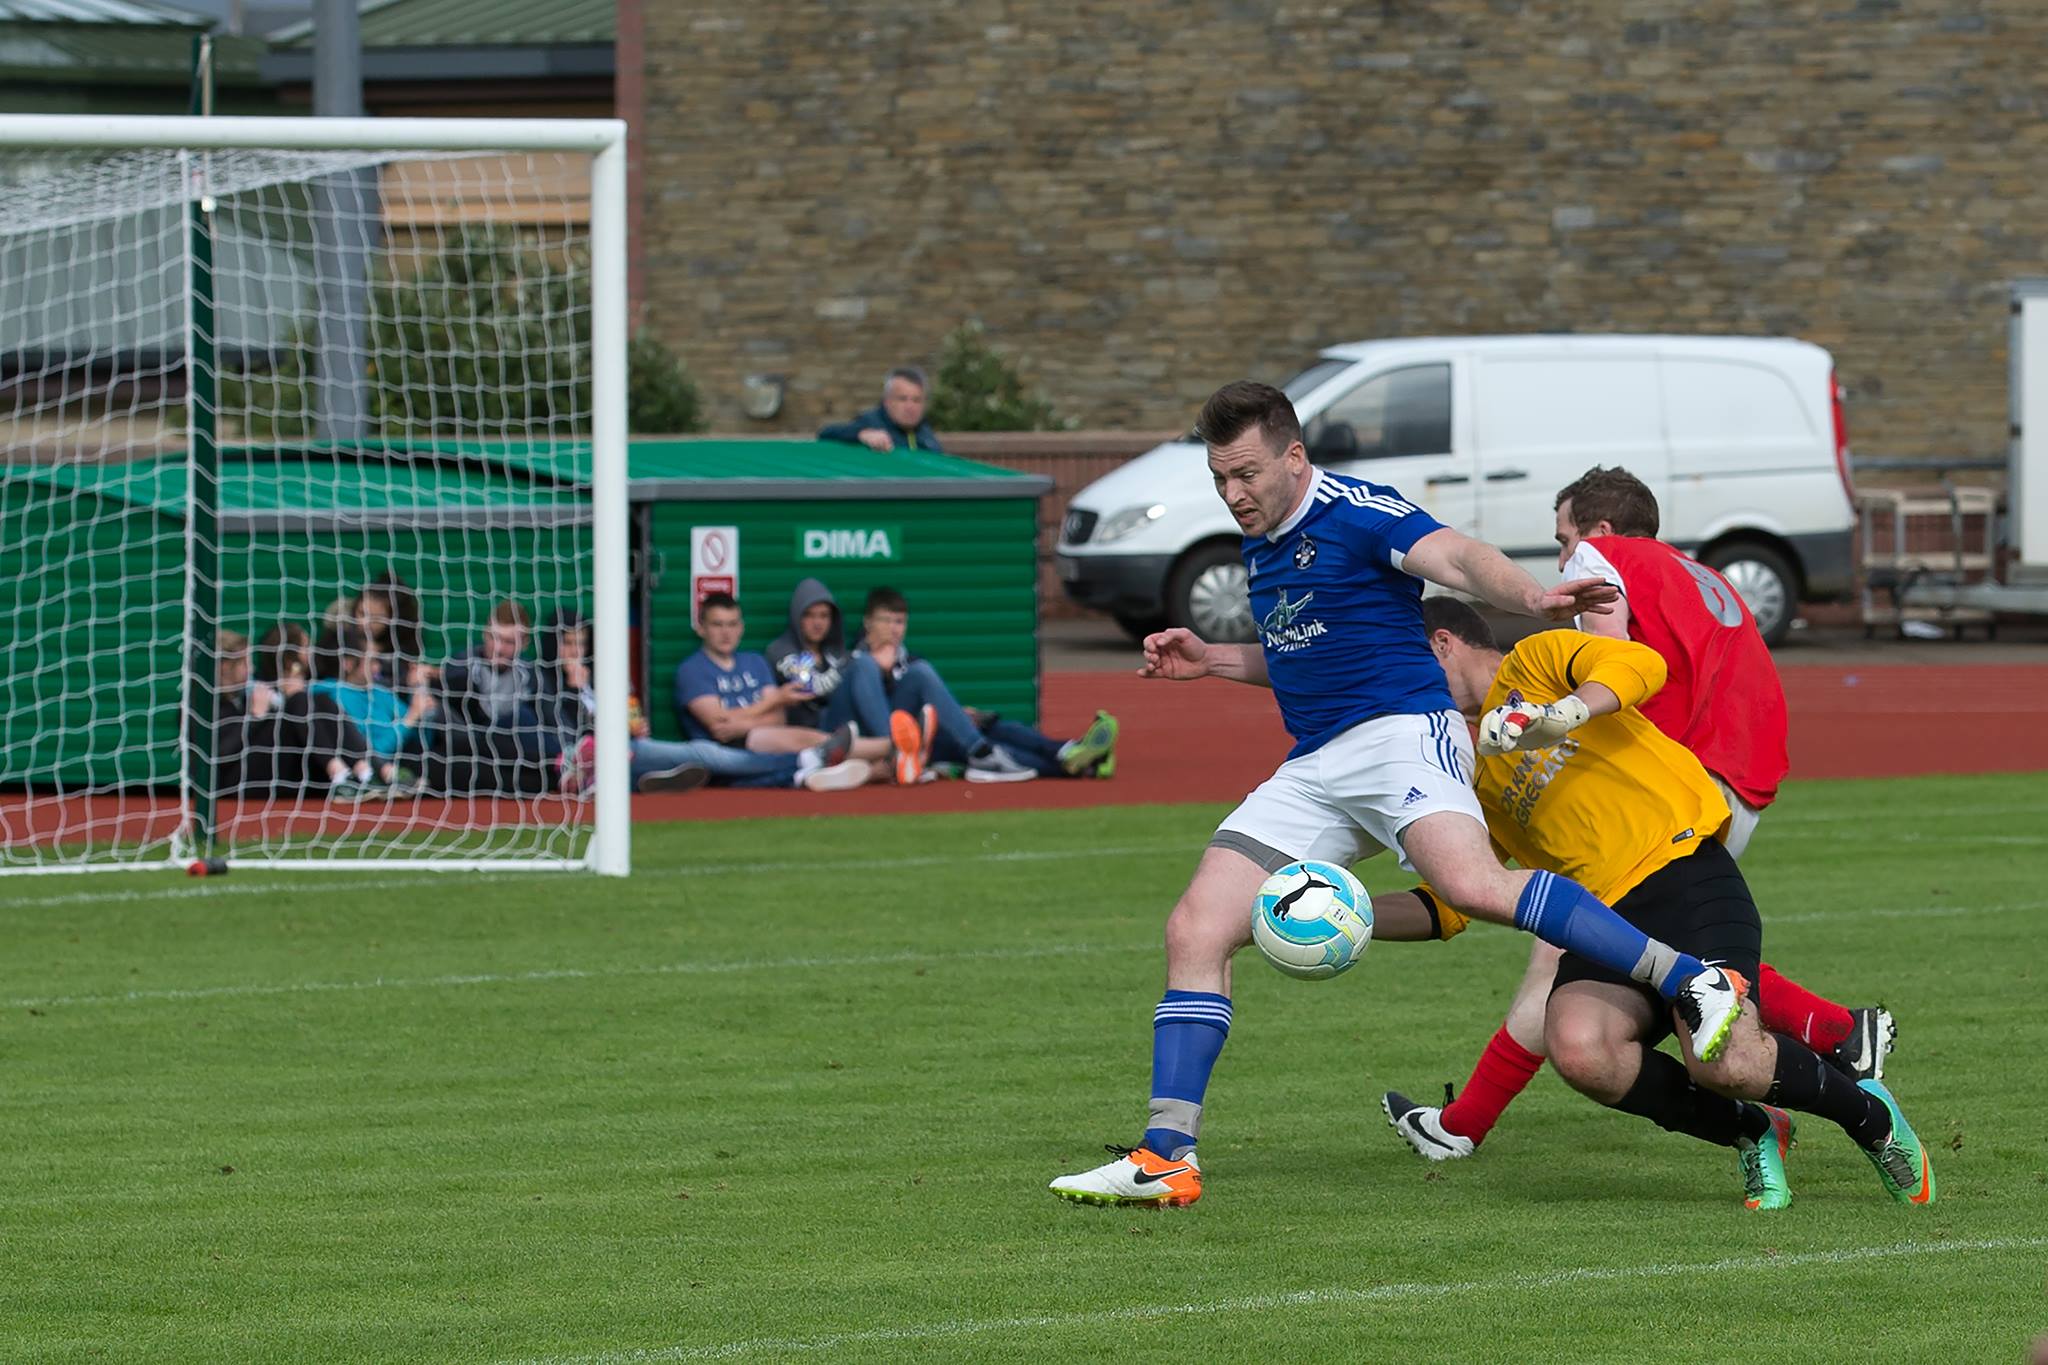 Paul Molloy on target for Shetland's first goal. Photo Kevin Jones.